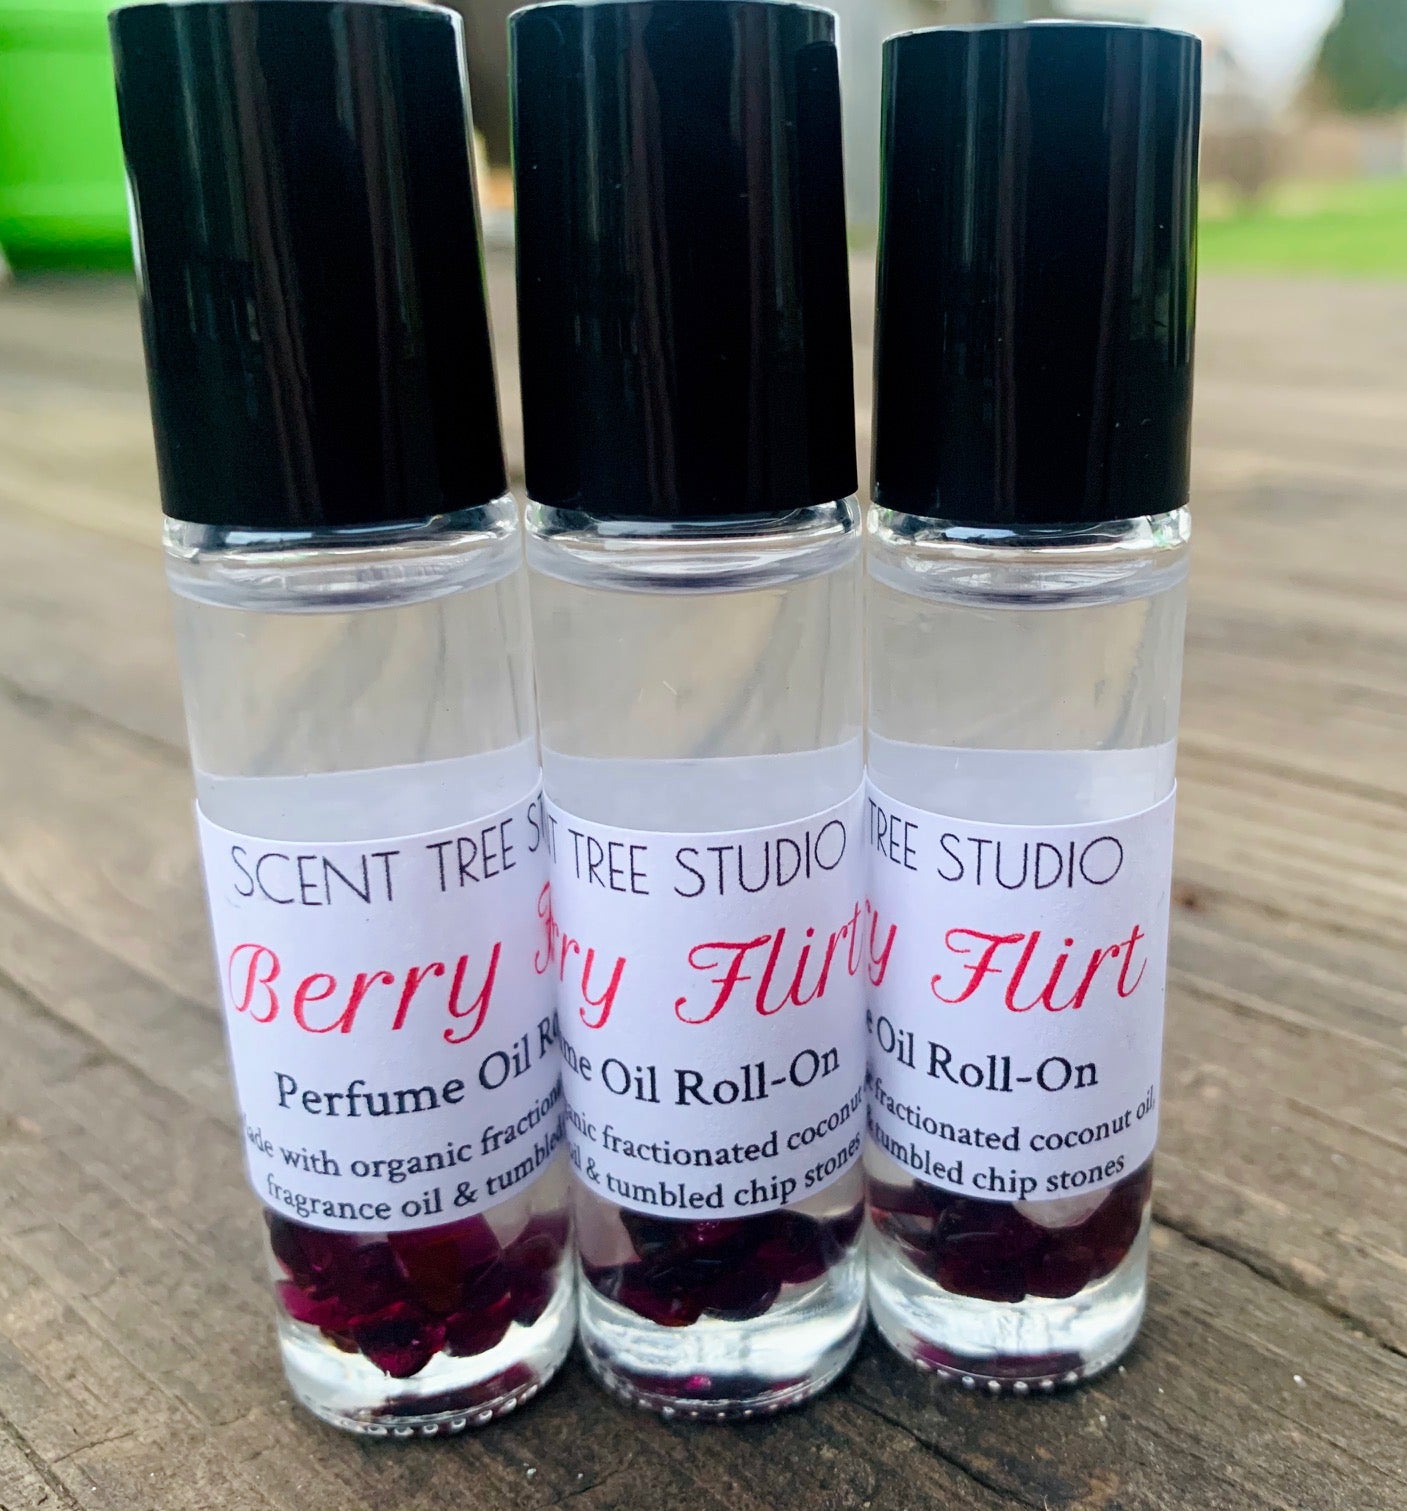 Berry Flirt Perfume Oil Roll-On - Scent Tree Studio